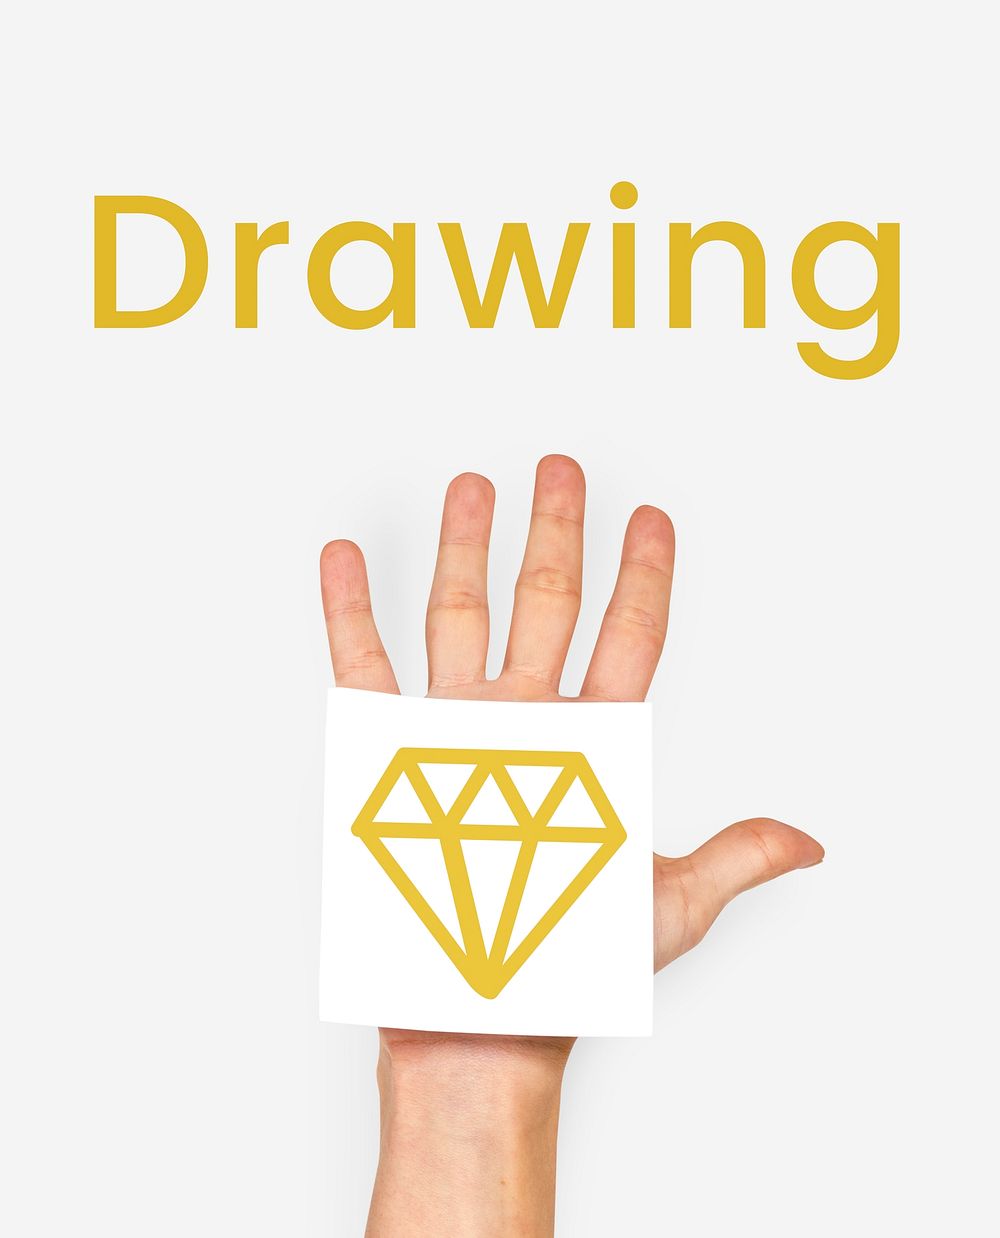 Graphic of creative design with diamond symbol